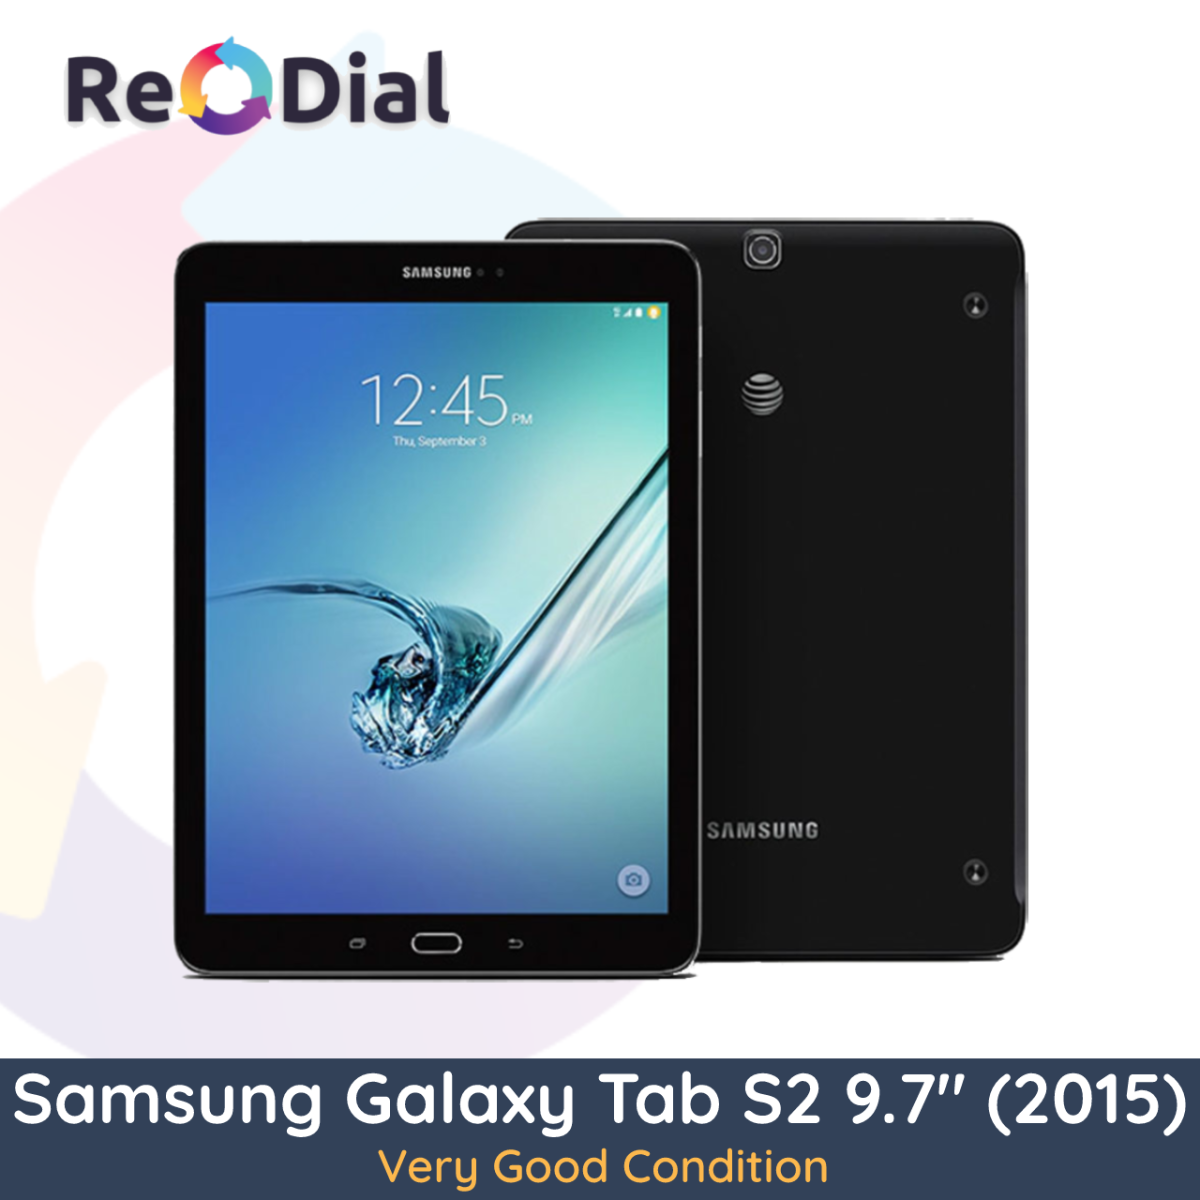 Samsung Galaxy Tab S2 9.7" (T819Y / 2015) WiFi + Cellular - Very Good Condition